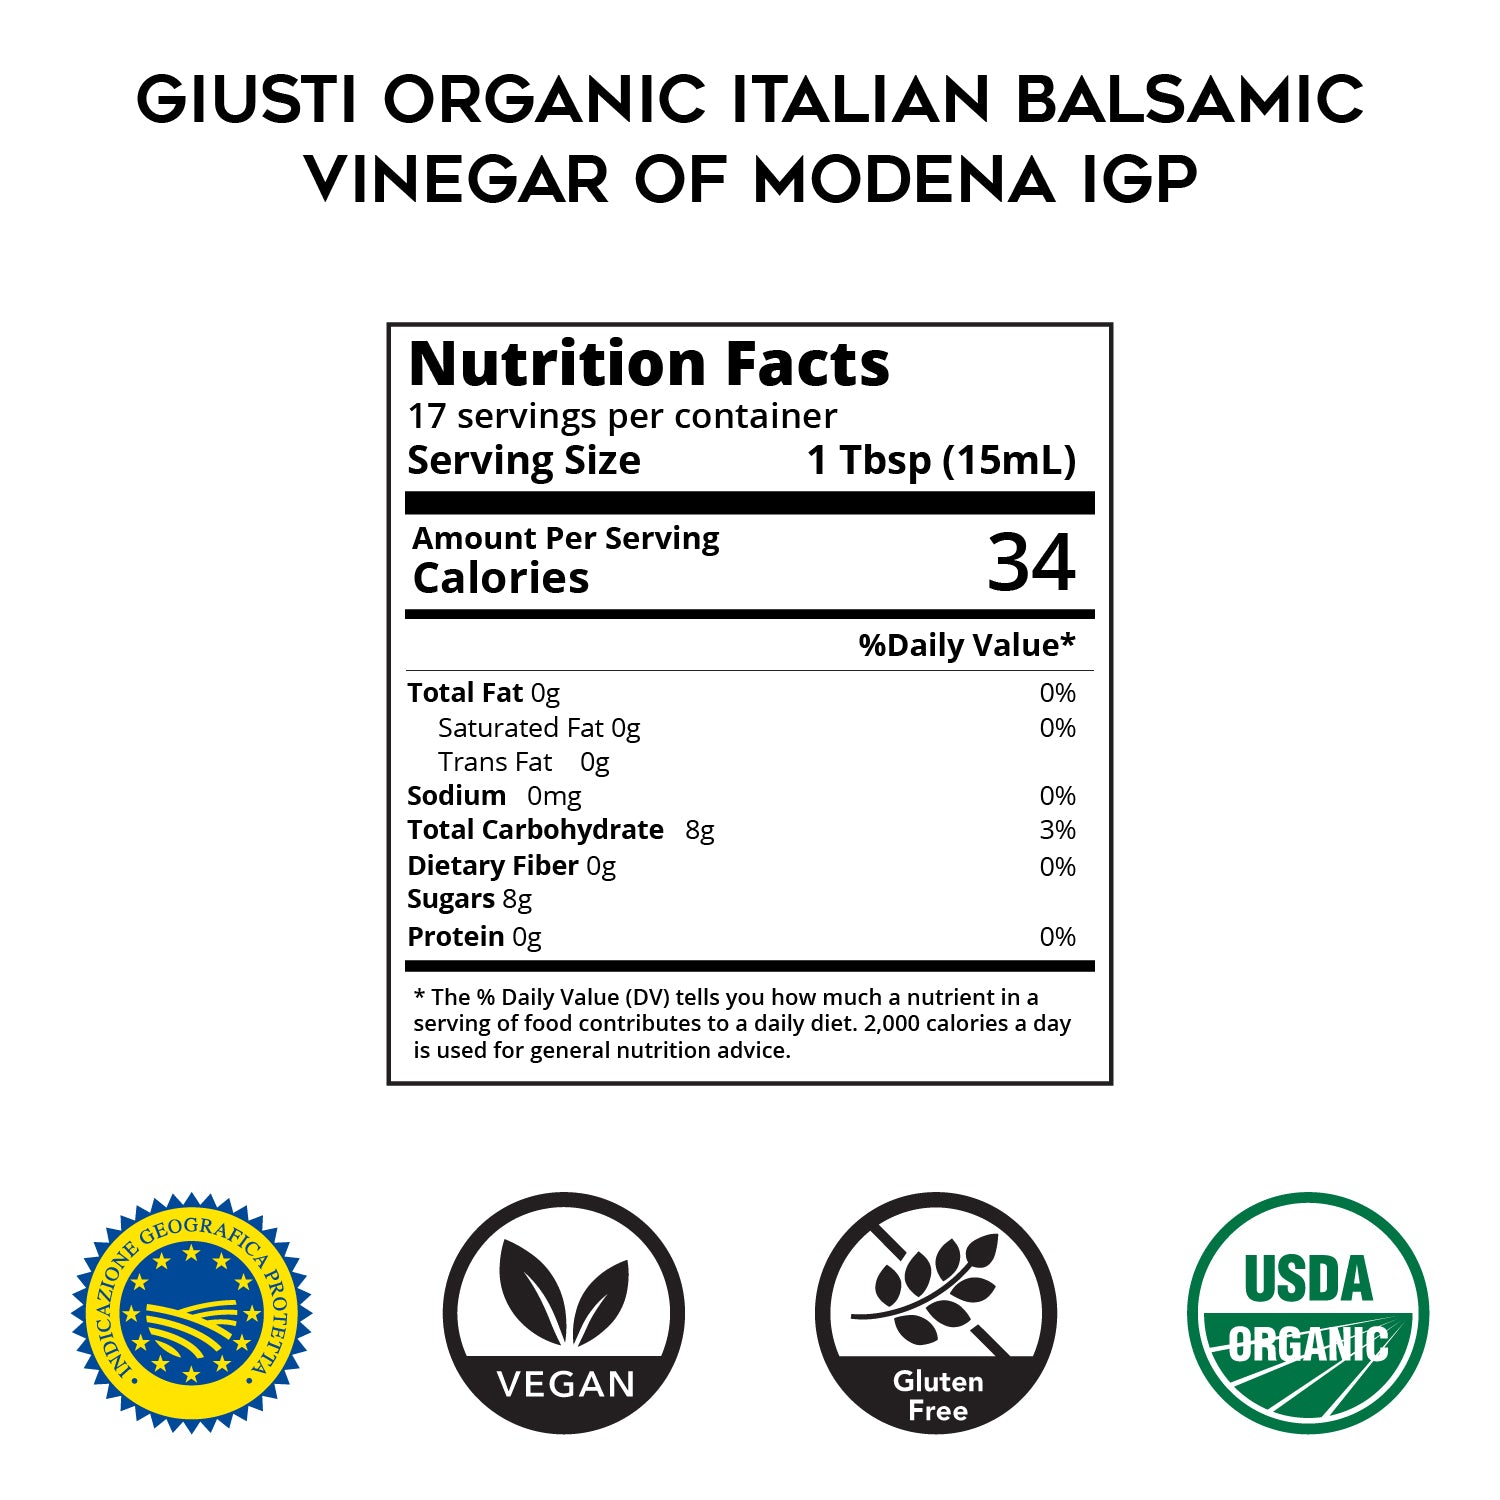 IGP Organic Aged (6yr) Italian Balsamic Vinegar of Modena by Giusti